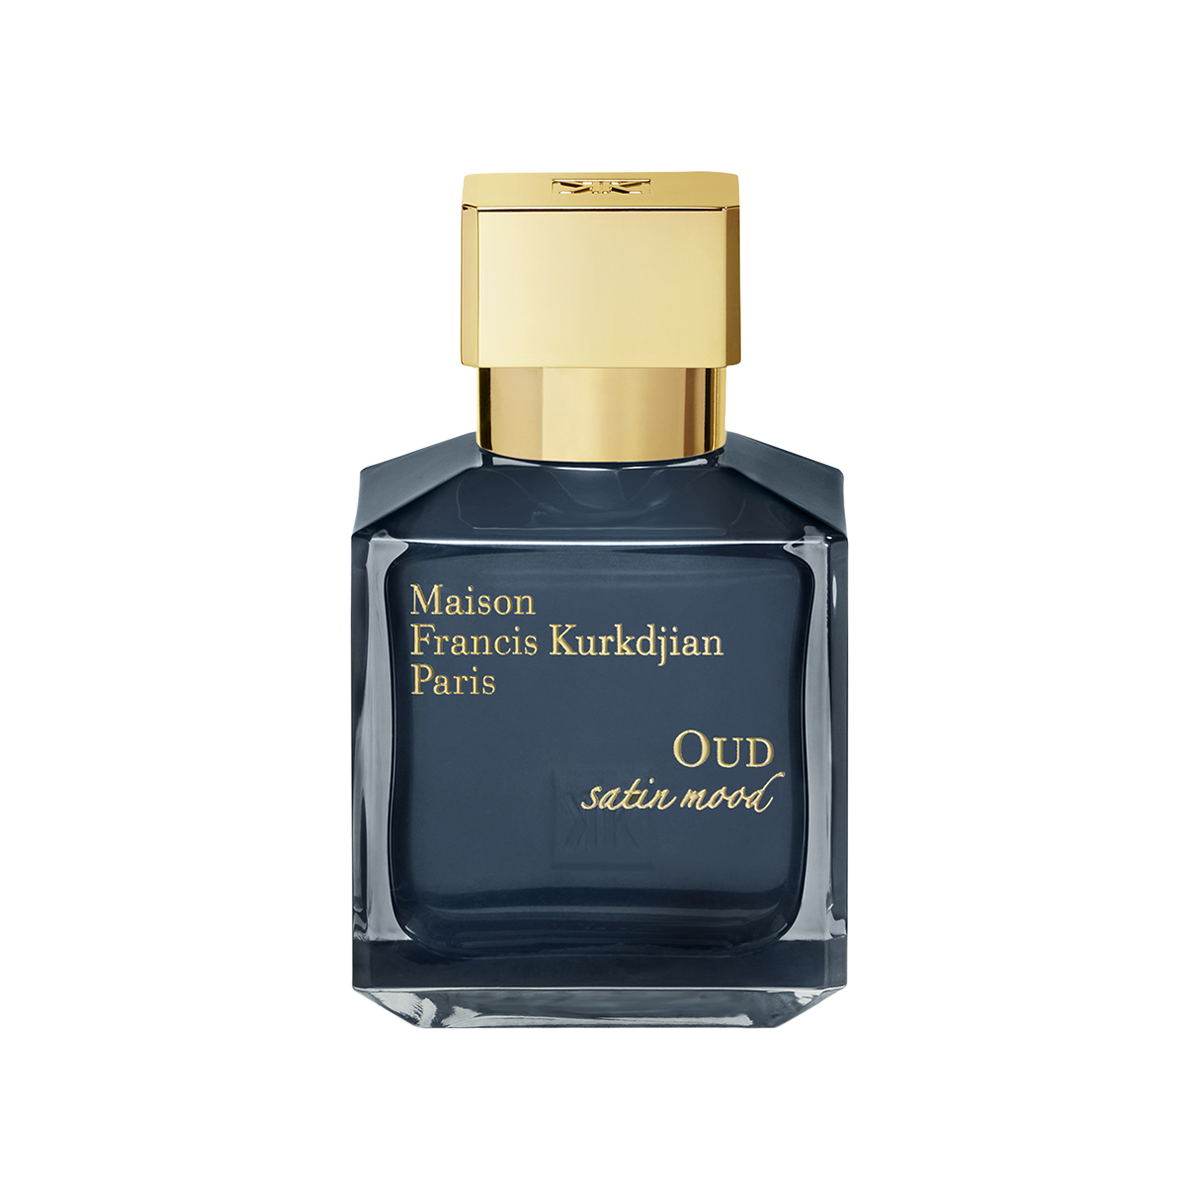 Maison Francis Kurkdjian - Oud Satin Mood Eau de Parfum